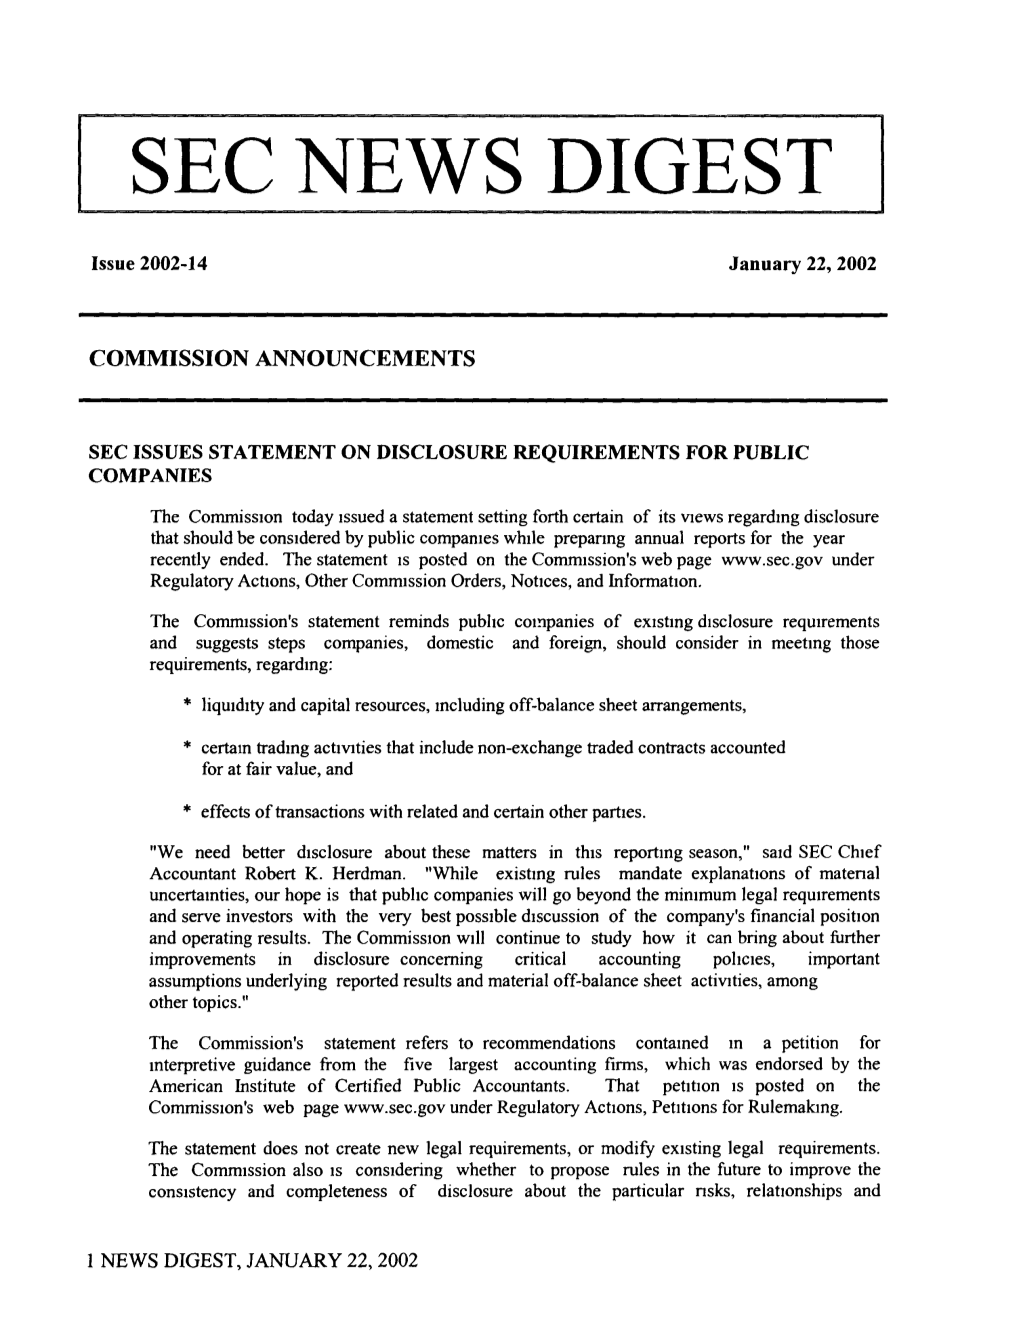 SEC News Digest, 01-22-2002